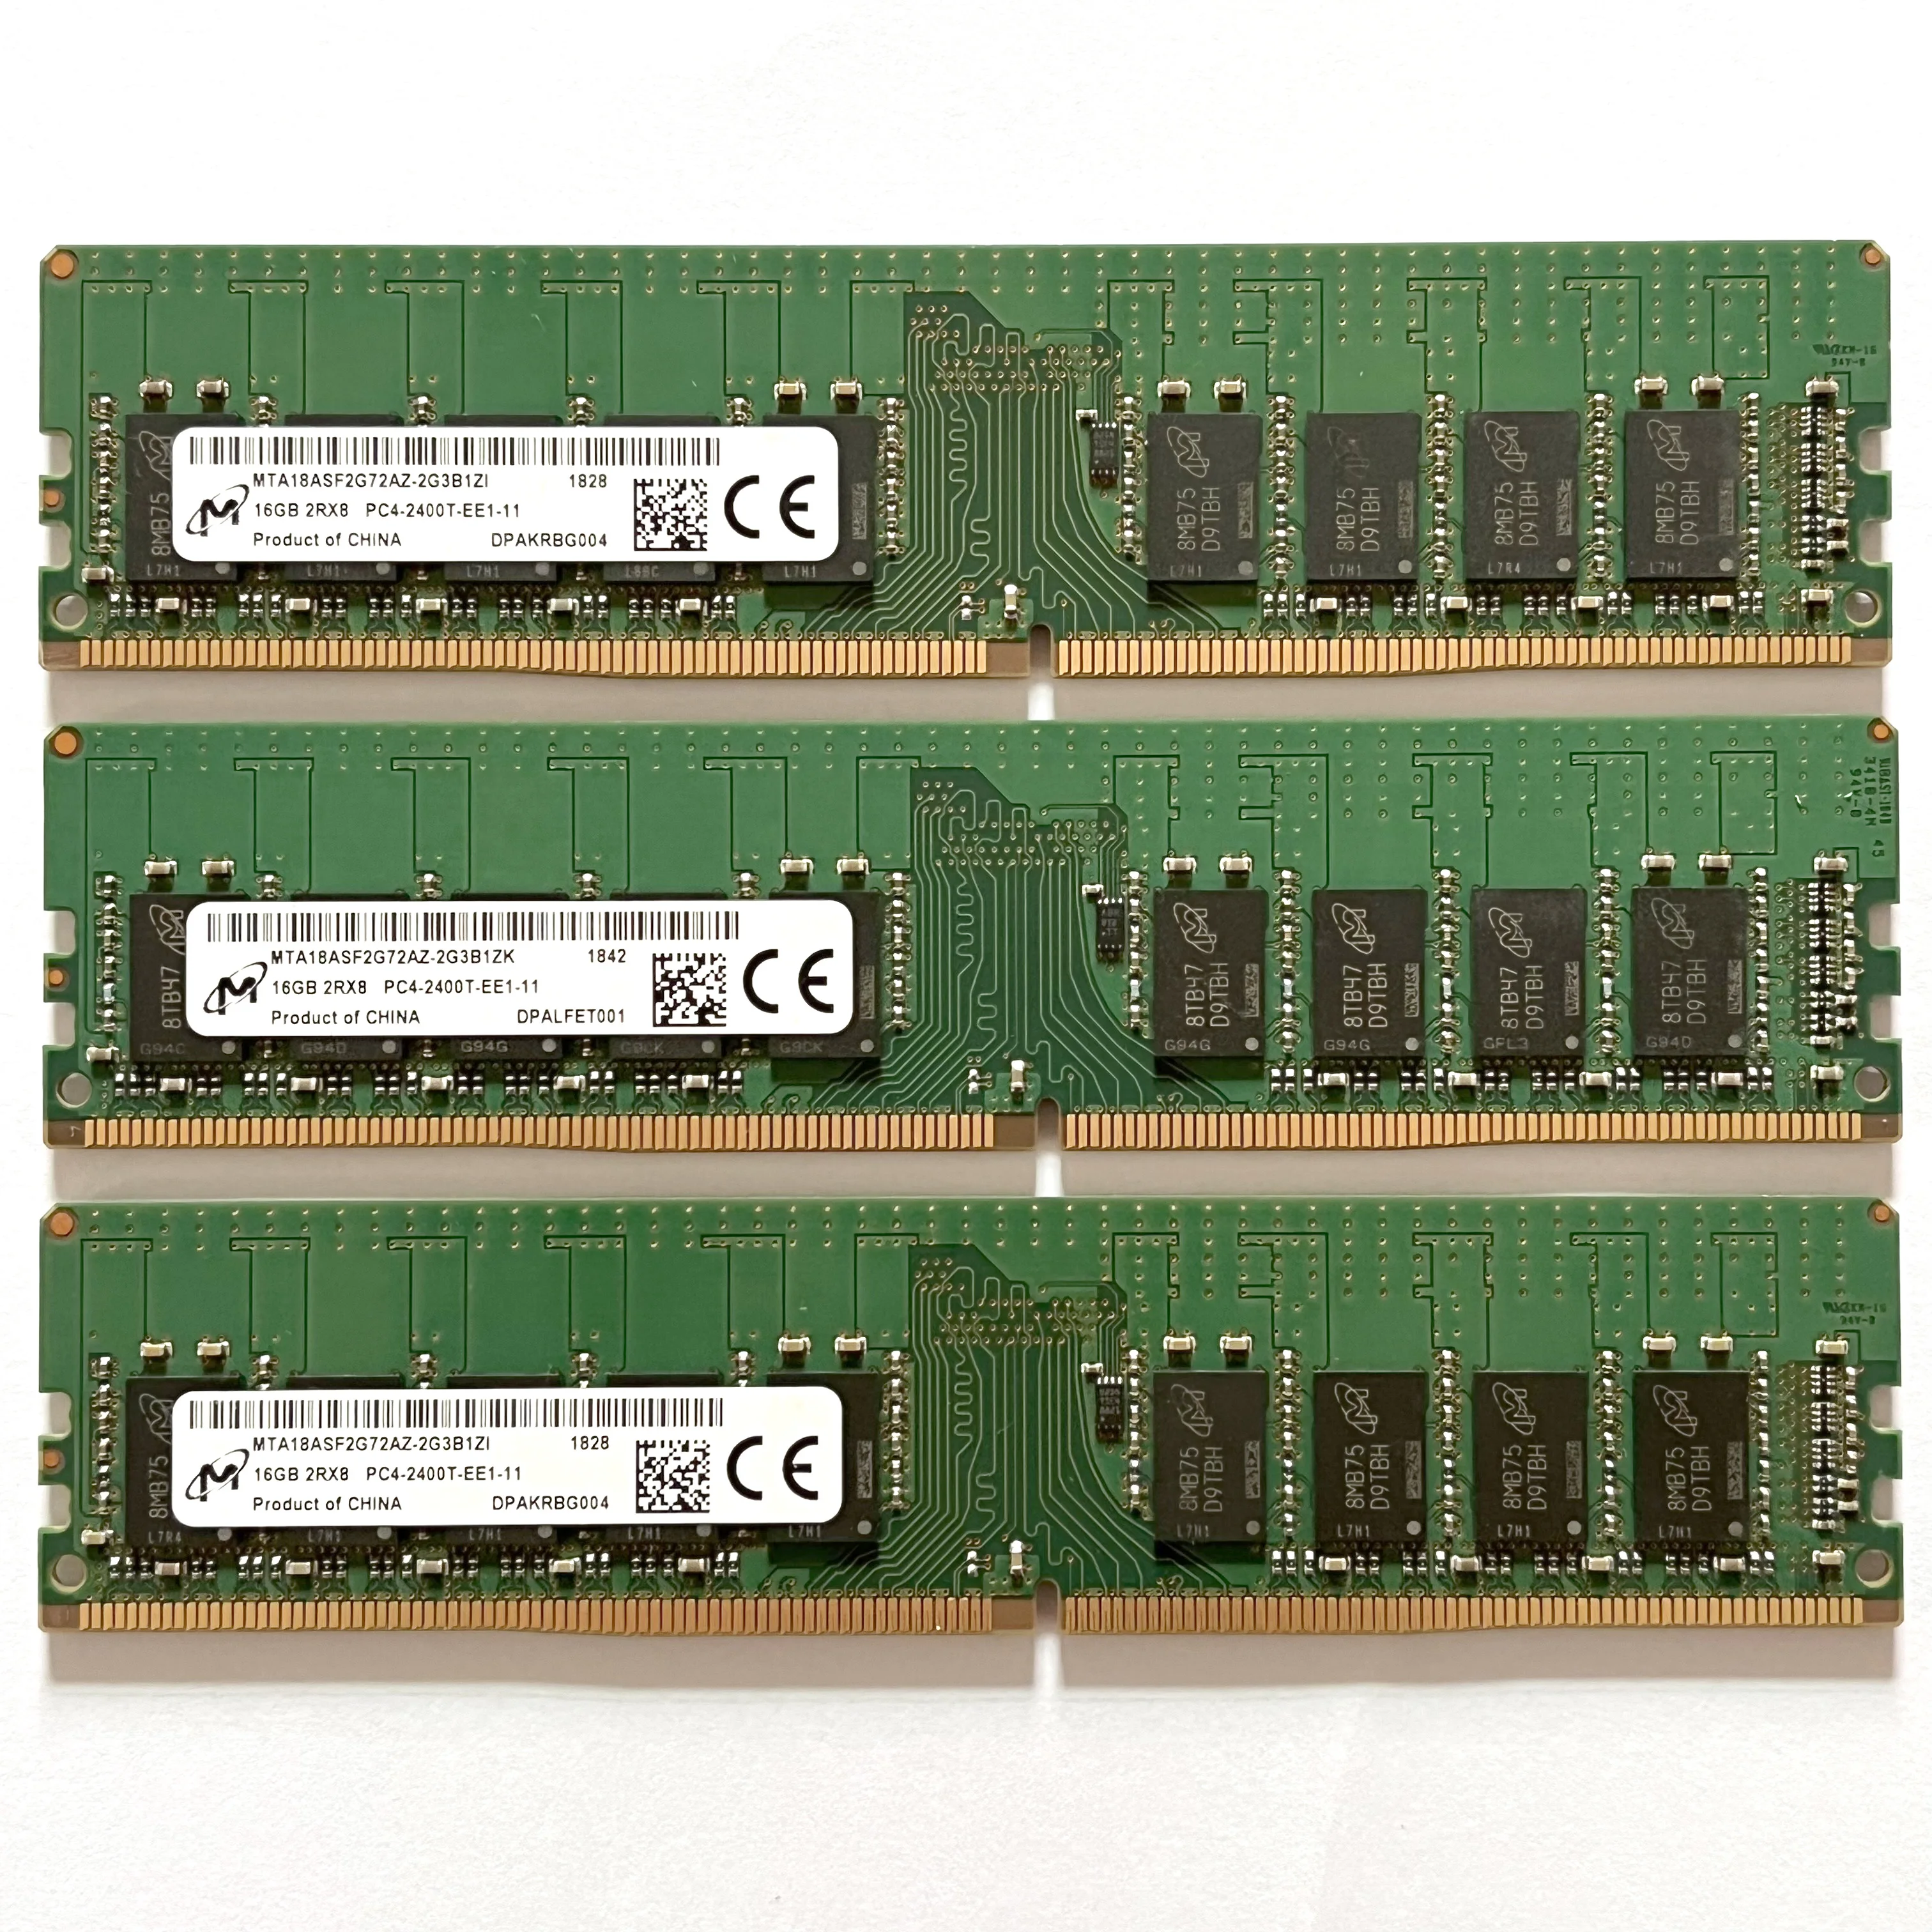 

Micron DDR4 16GB 2400MHz ECC UDIMM RAM 16GB 2RX8 PC4-2400T-EE1-11 настольная память 288pin 1 шт.